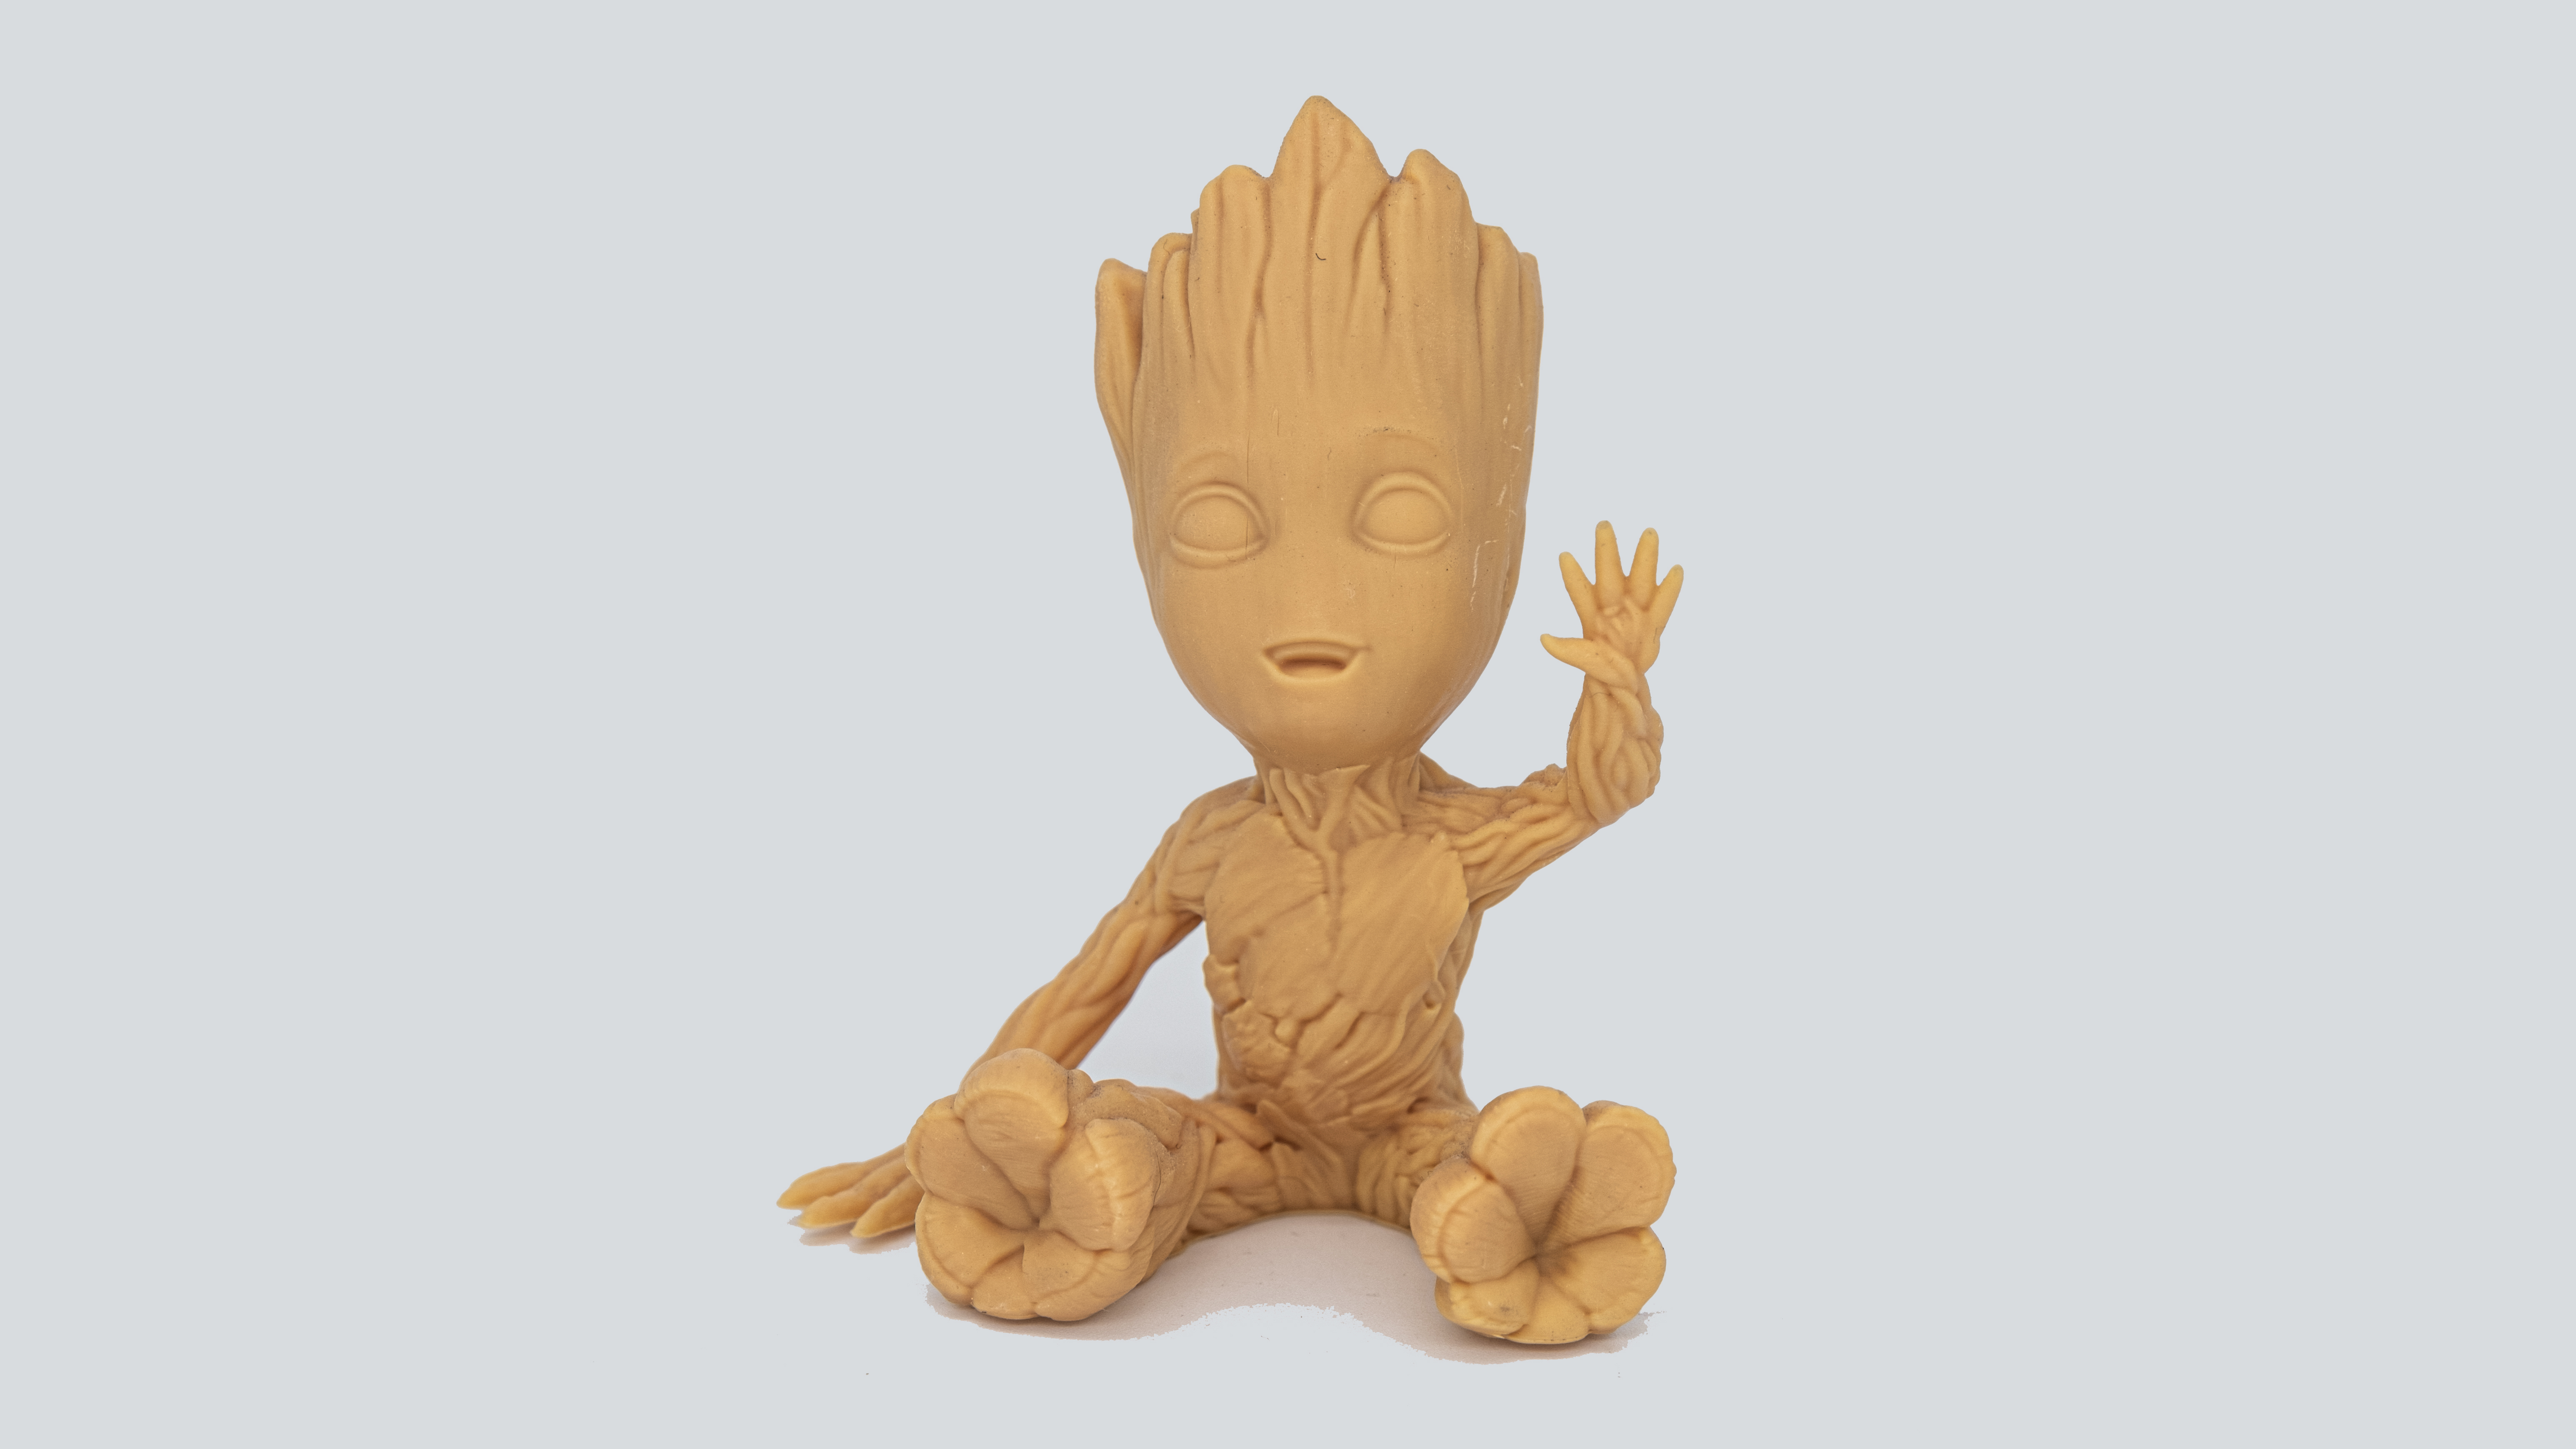 A sitting 3D-printed Baby Groot waving